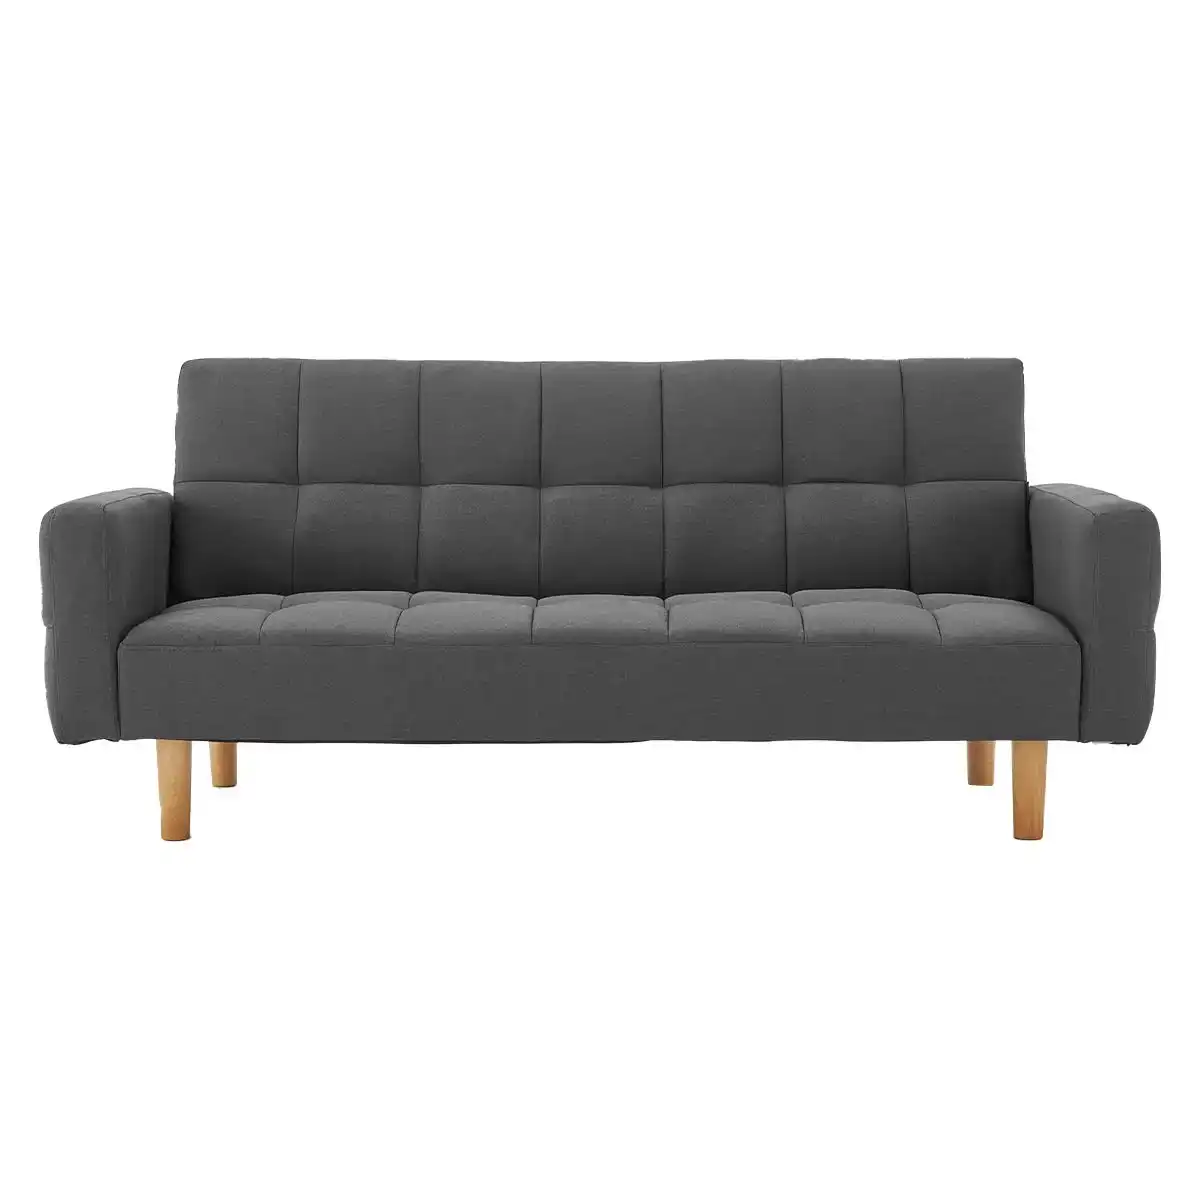 NNEDPE Sarantino 3-Seater Fabric Sofa Bed Futon - Dark Grey